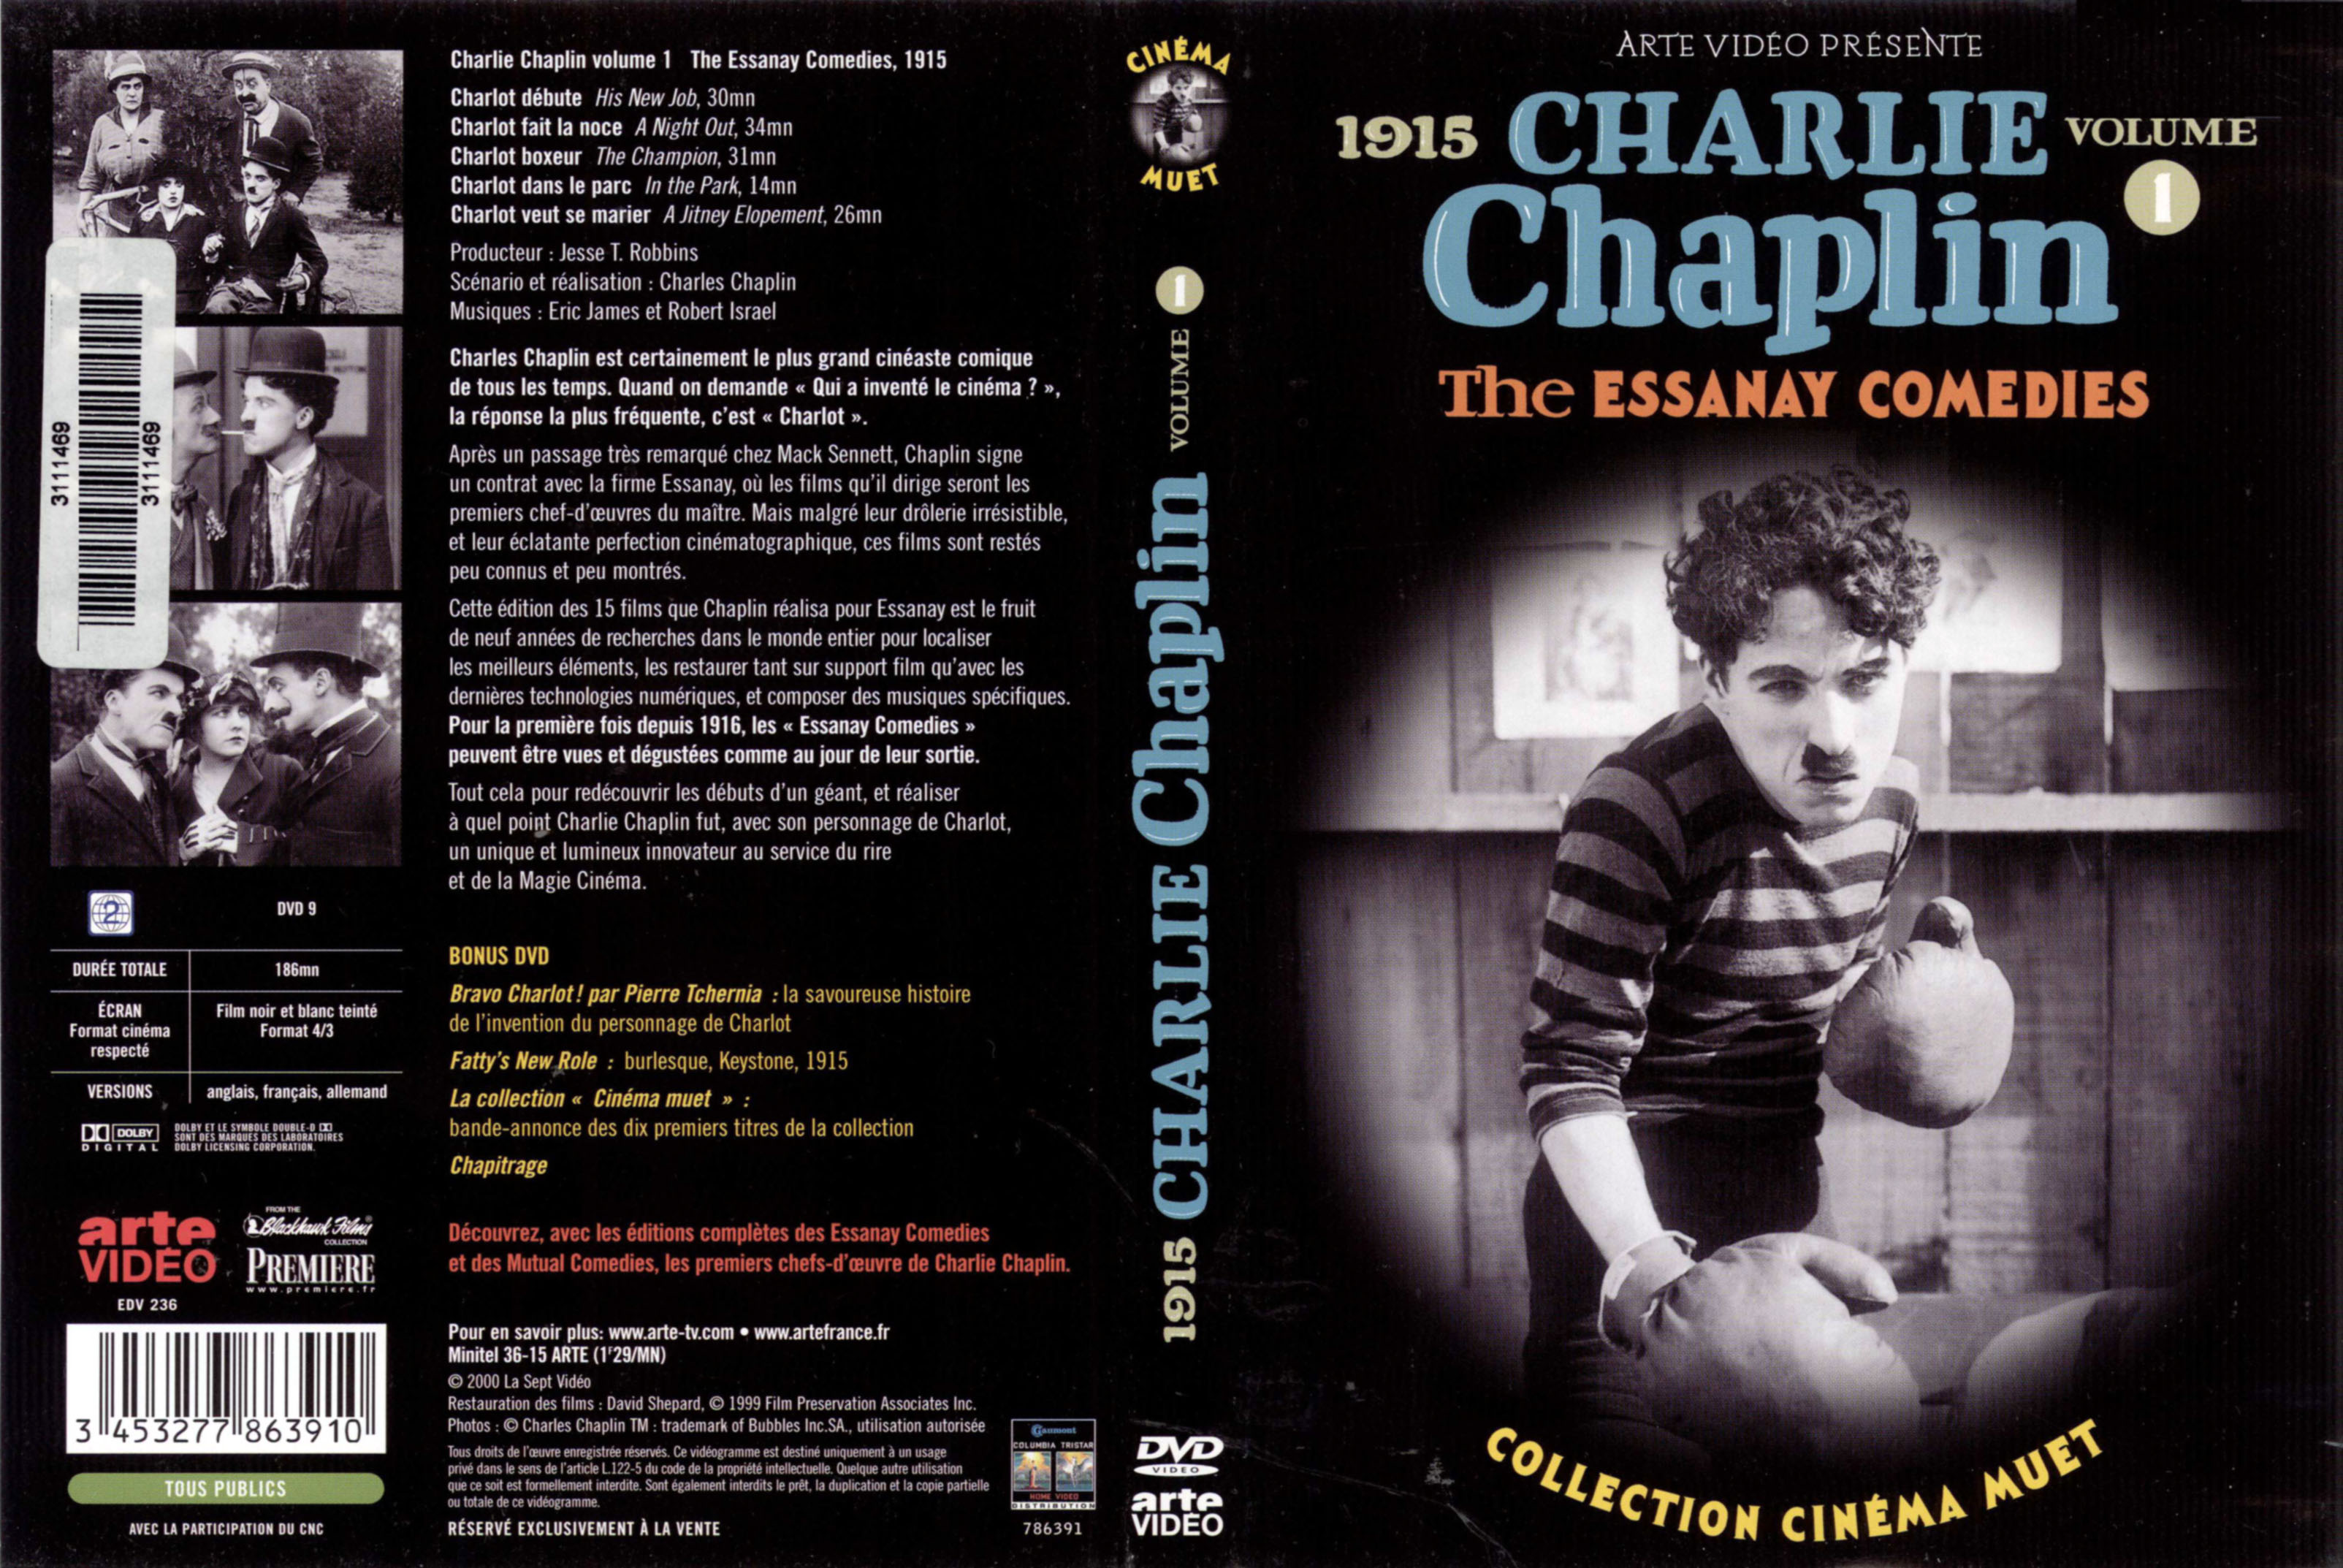 Jaquette DVD Charlie Chaplin The Essanay comedies vol 1